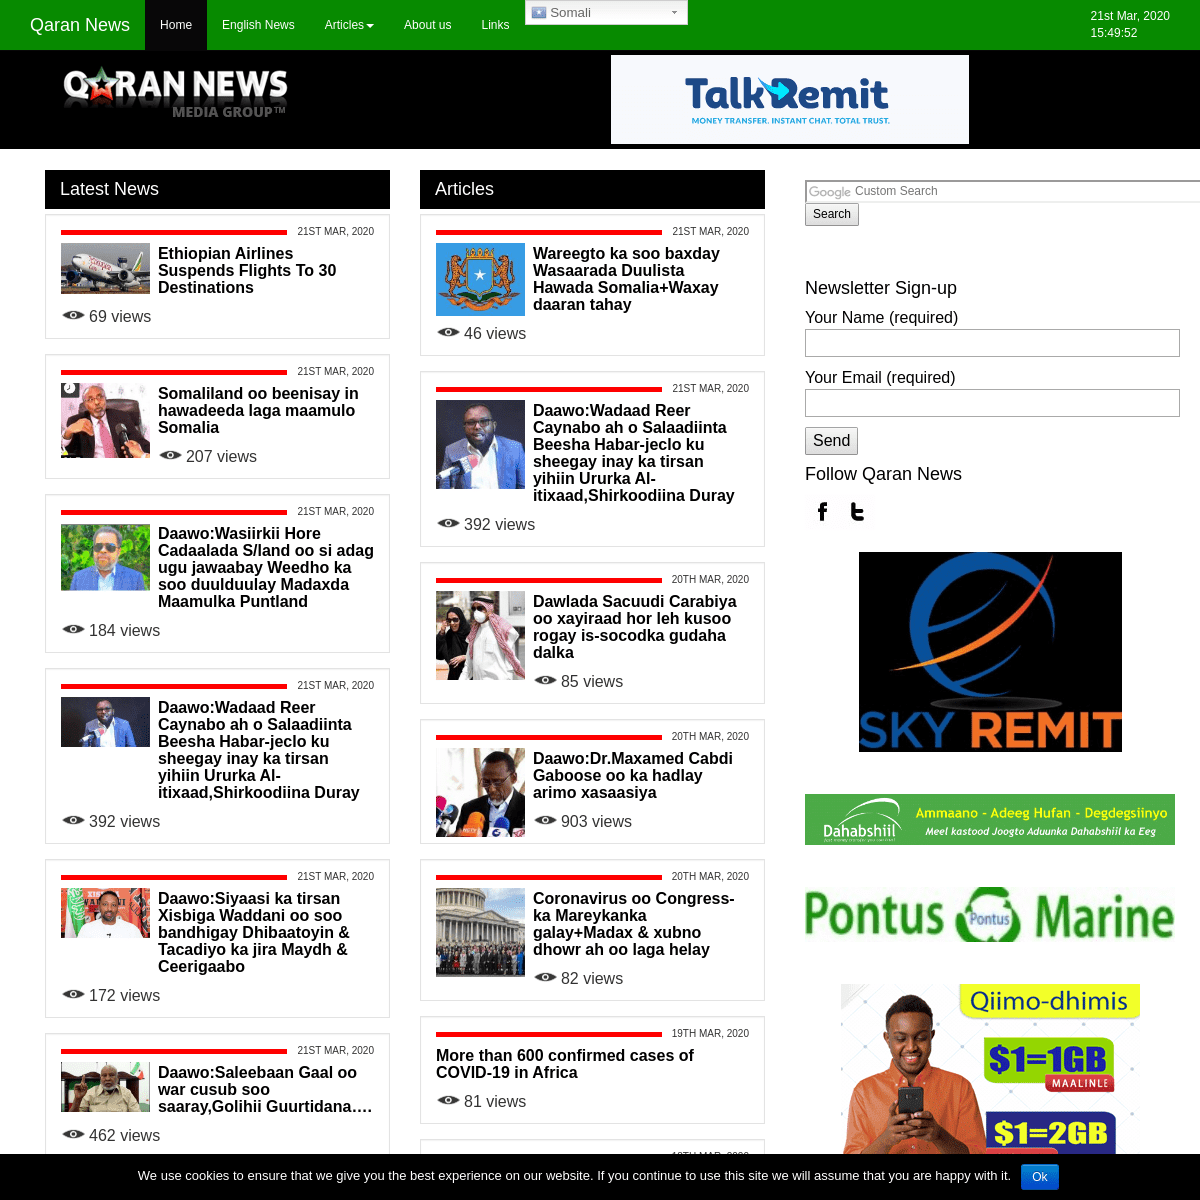 A complete backup of qarannews.com